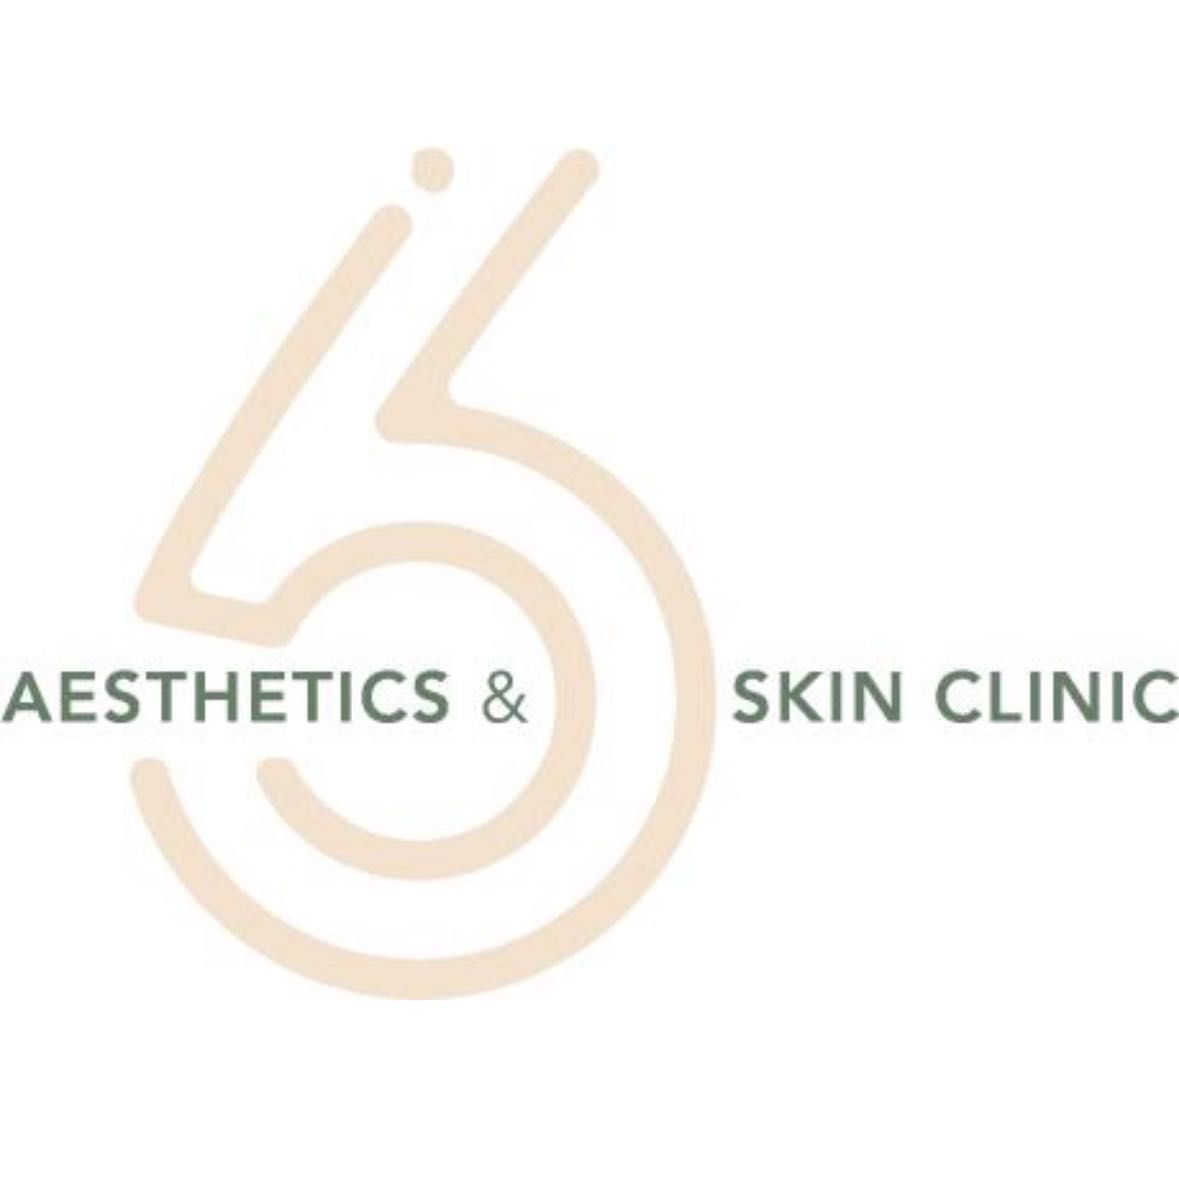 6 Aesthetics & Skin Clinic, 122 Meanwood Road, LS7 2AQ, Leeds